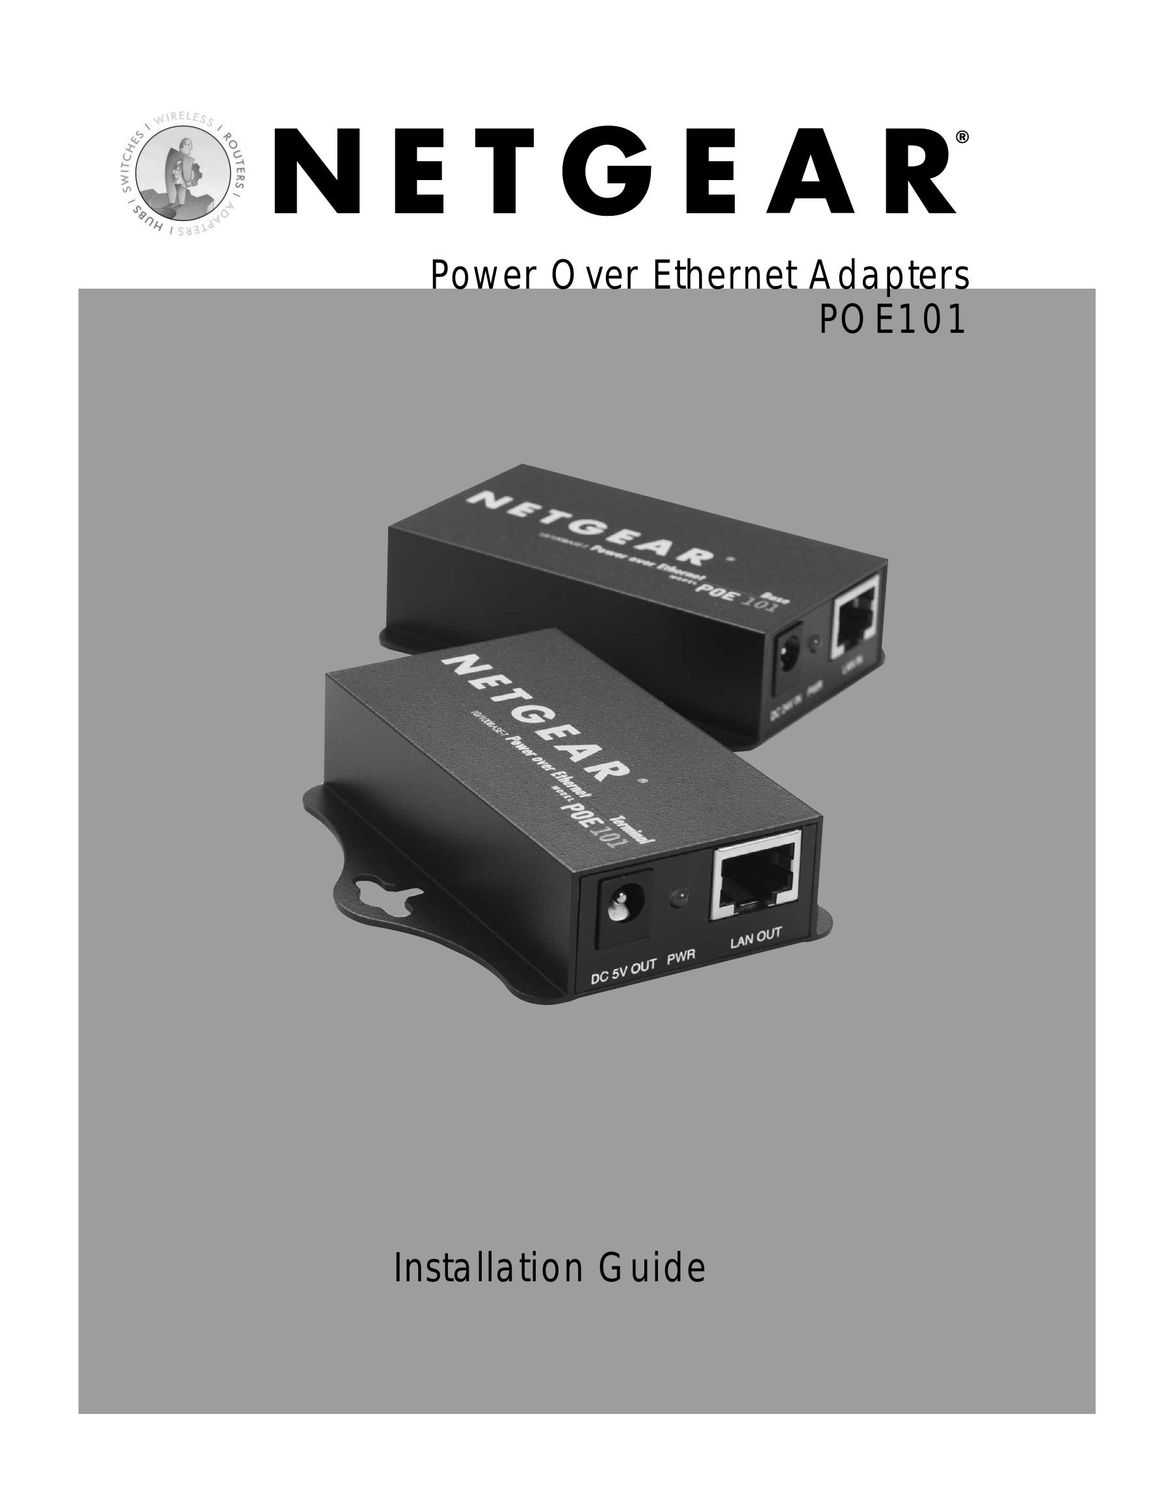 NETGEAR POE101 Network Card User Manual